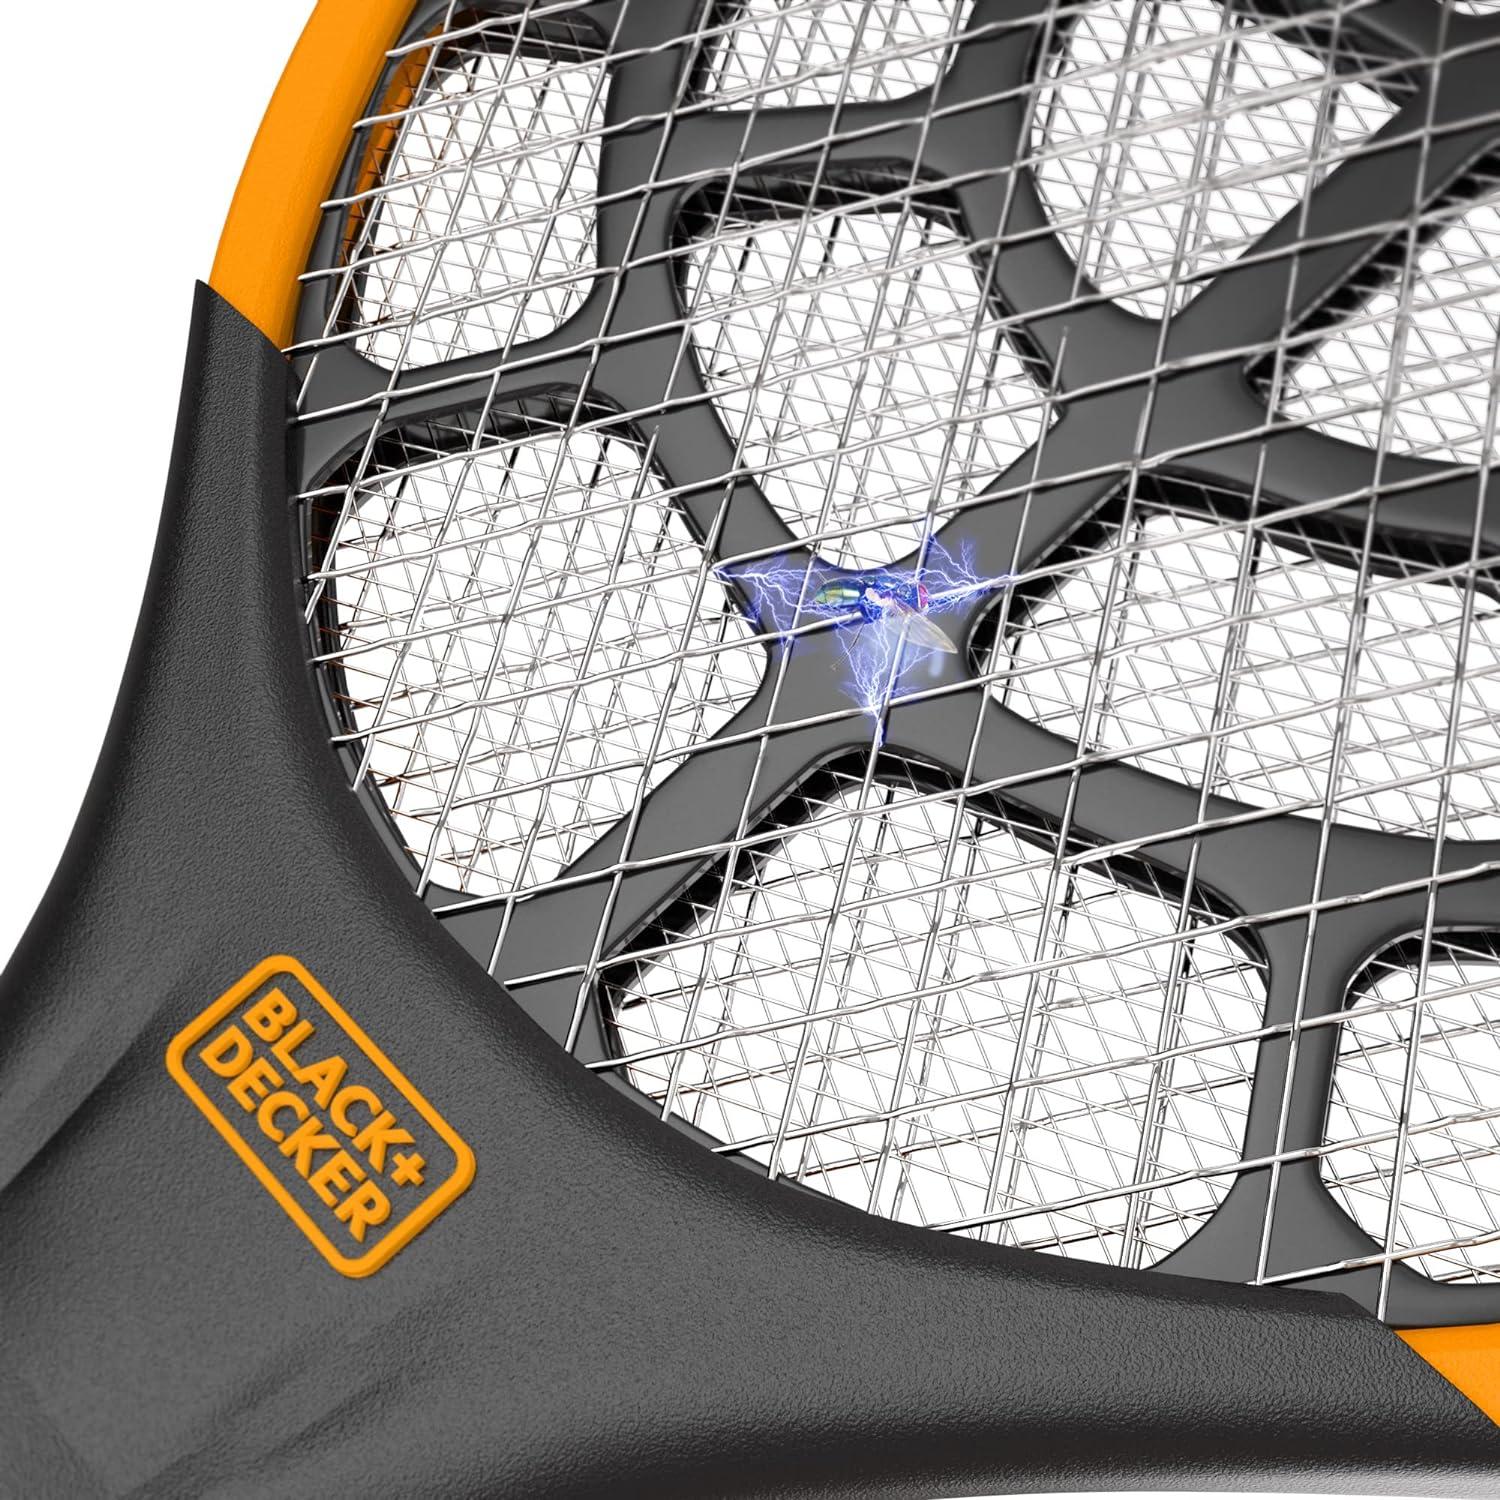 Black+Decker Electric Fly Swatter, Handheld Bug Zapper Racket - Heavy